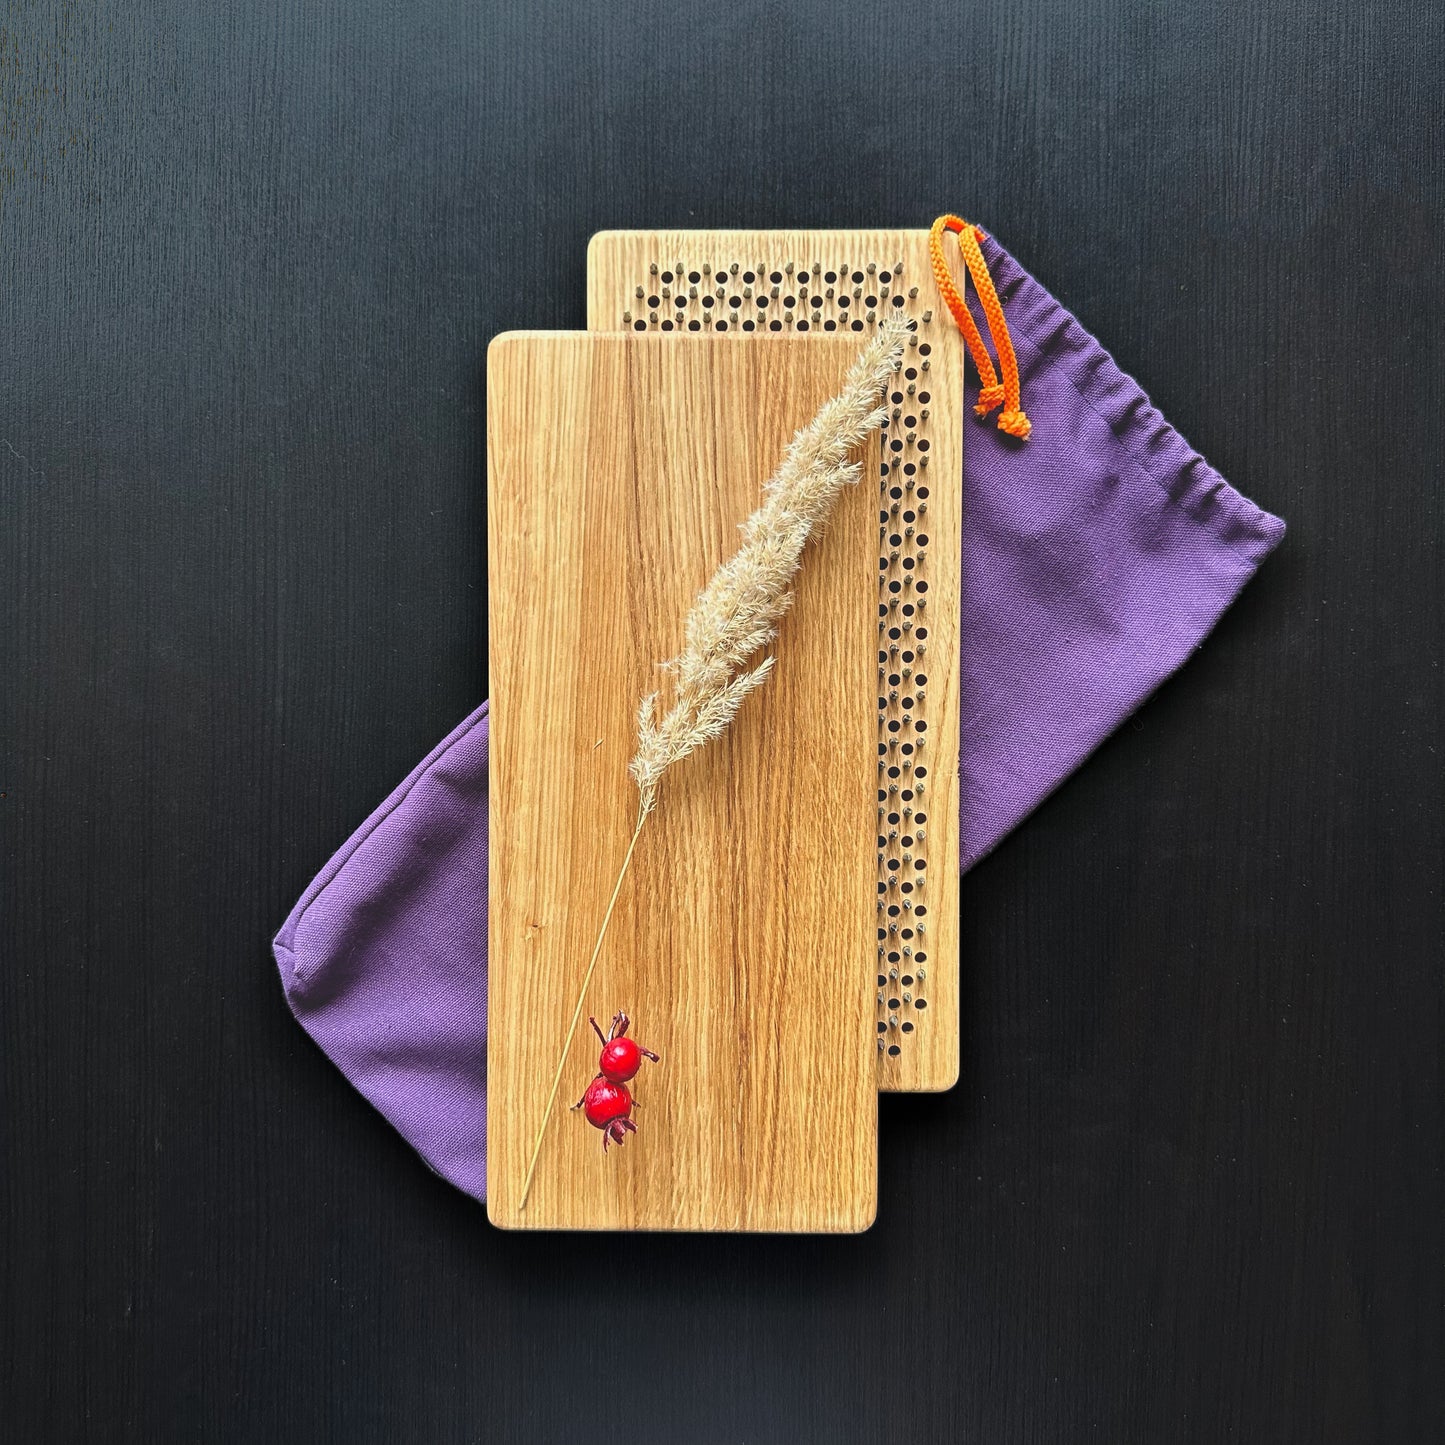 oak Sadhu board nails 10mm with case